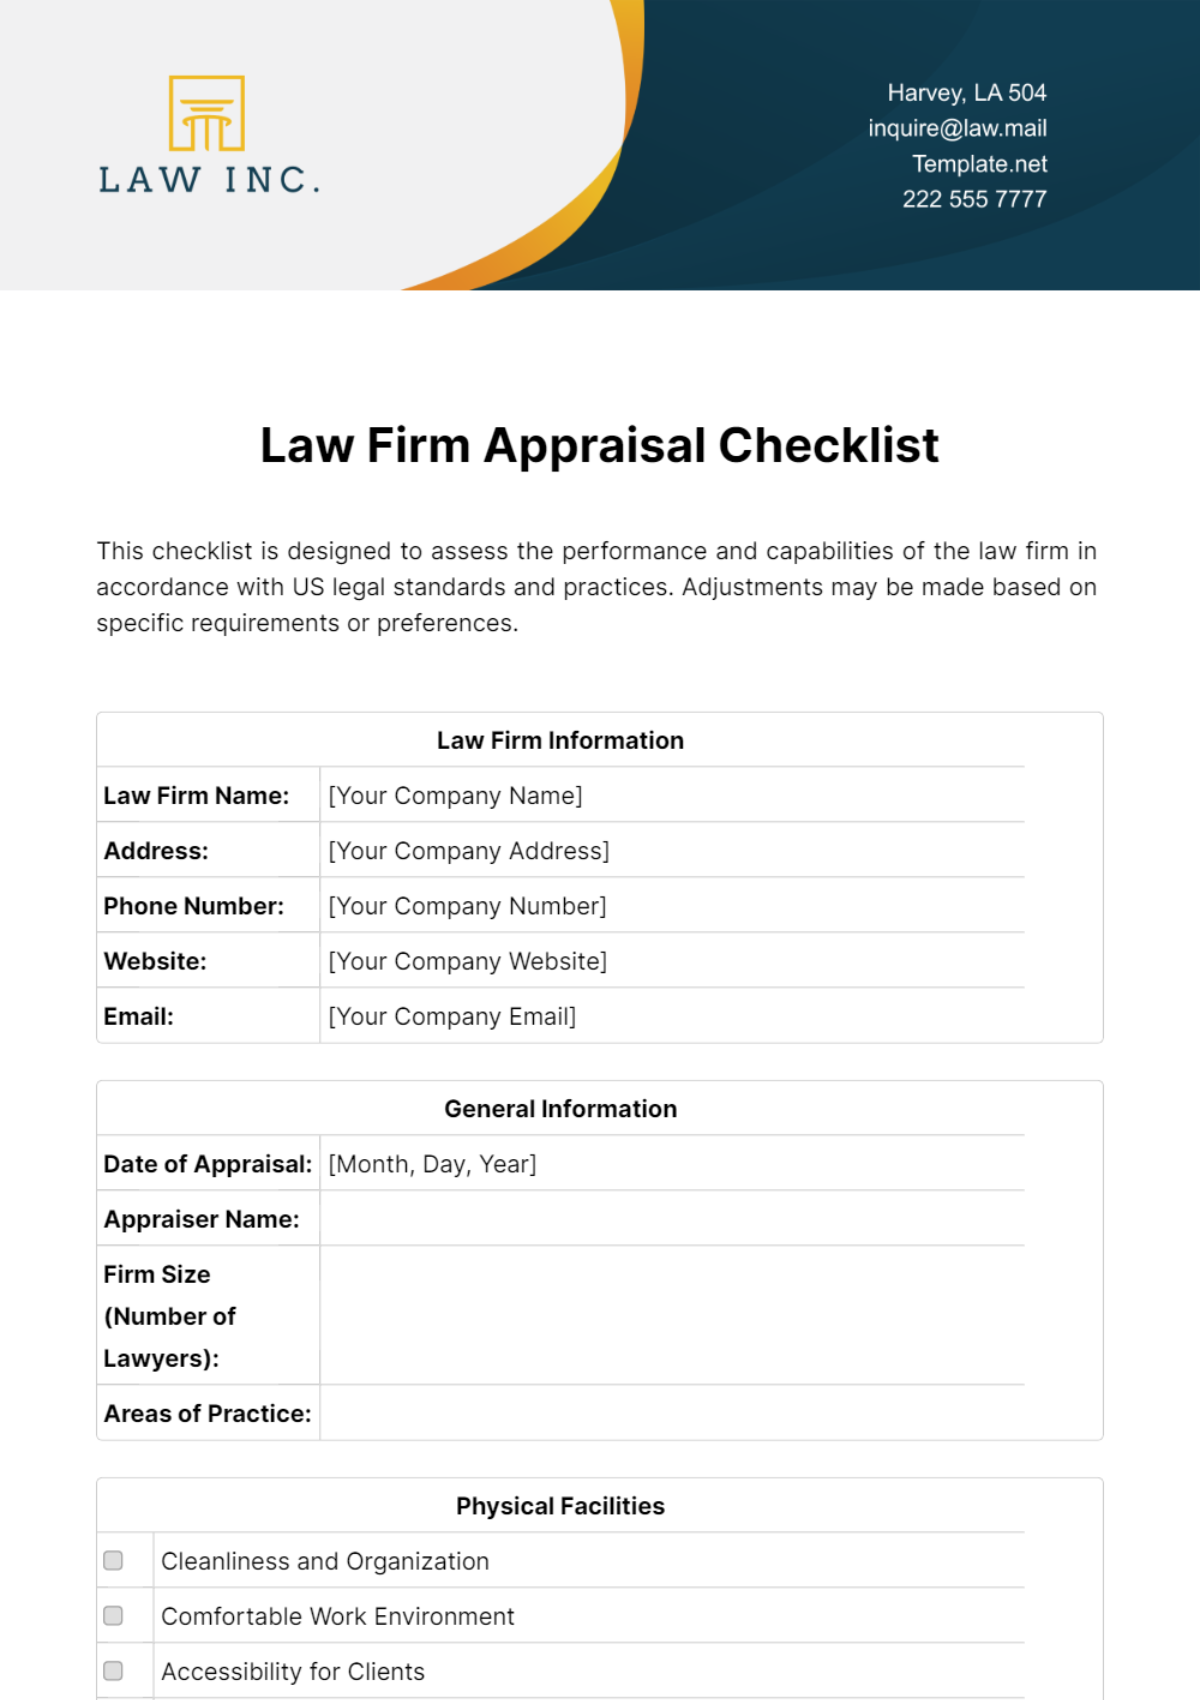 Law Firm Appraisal Checklist Template